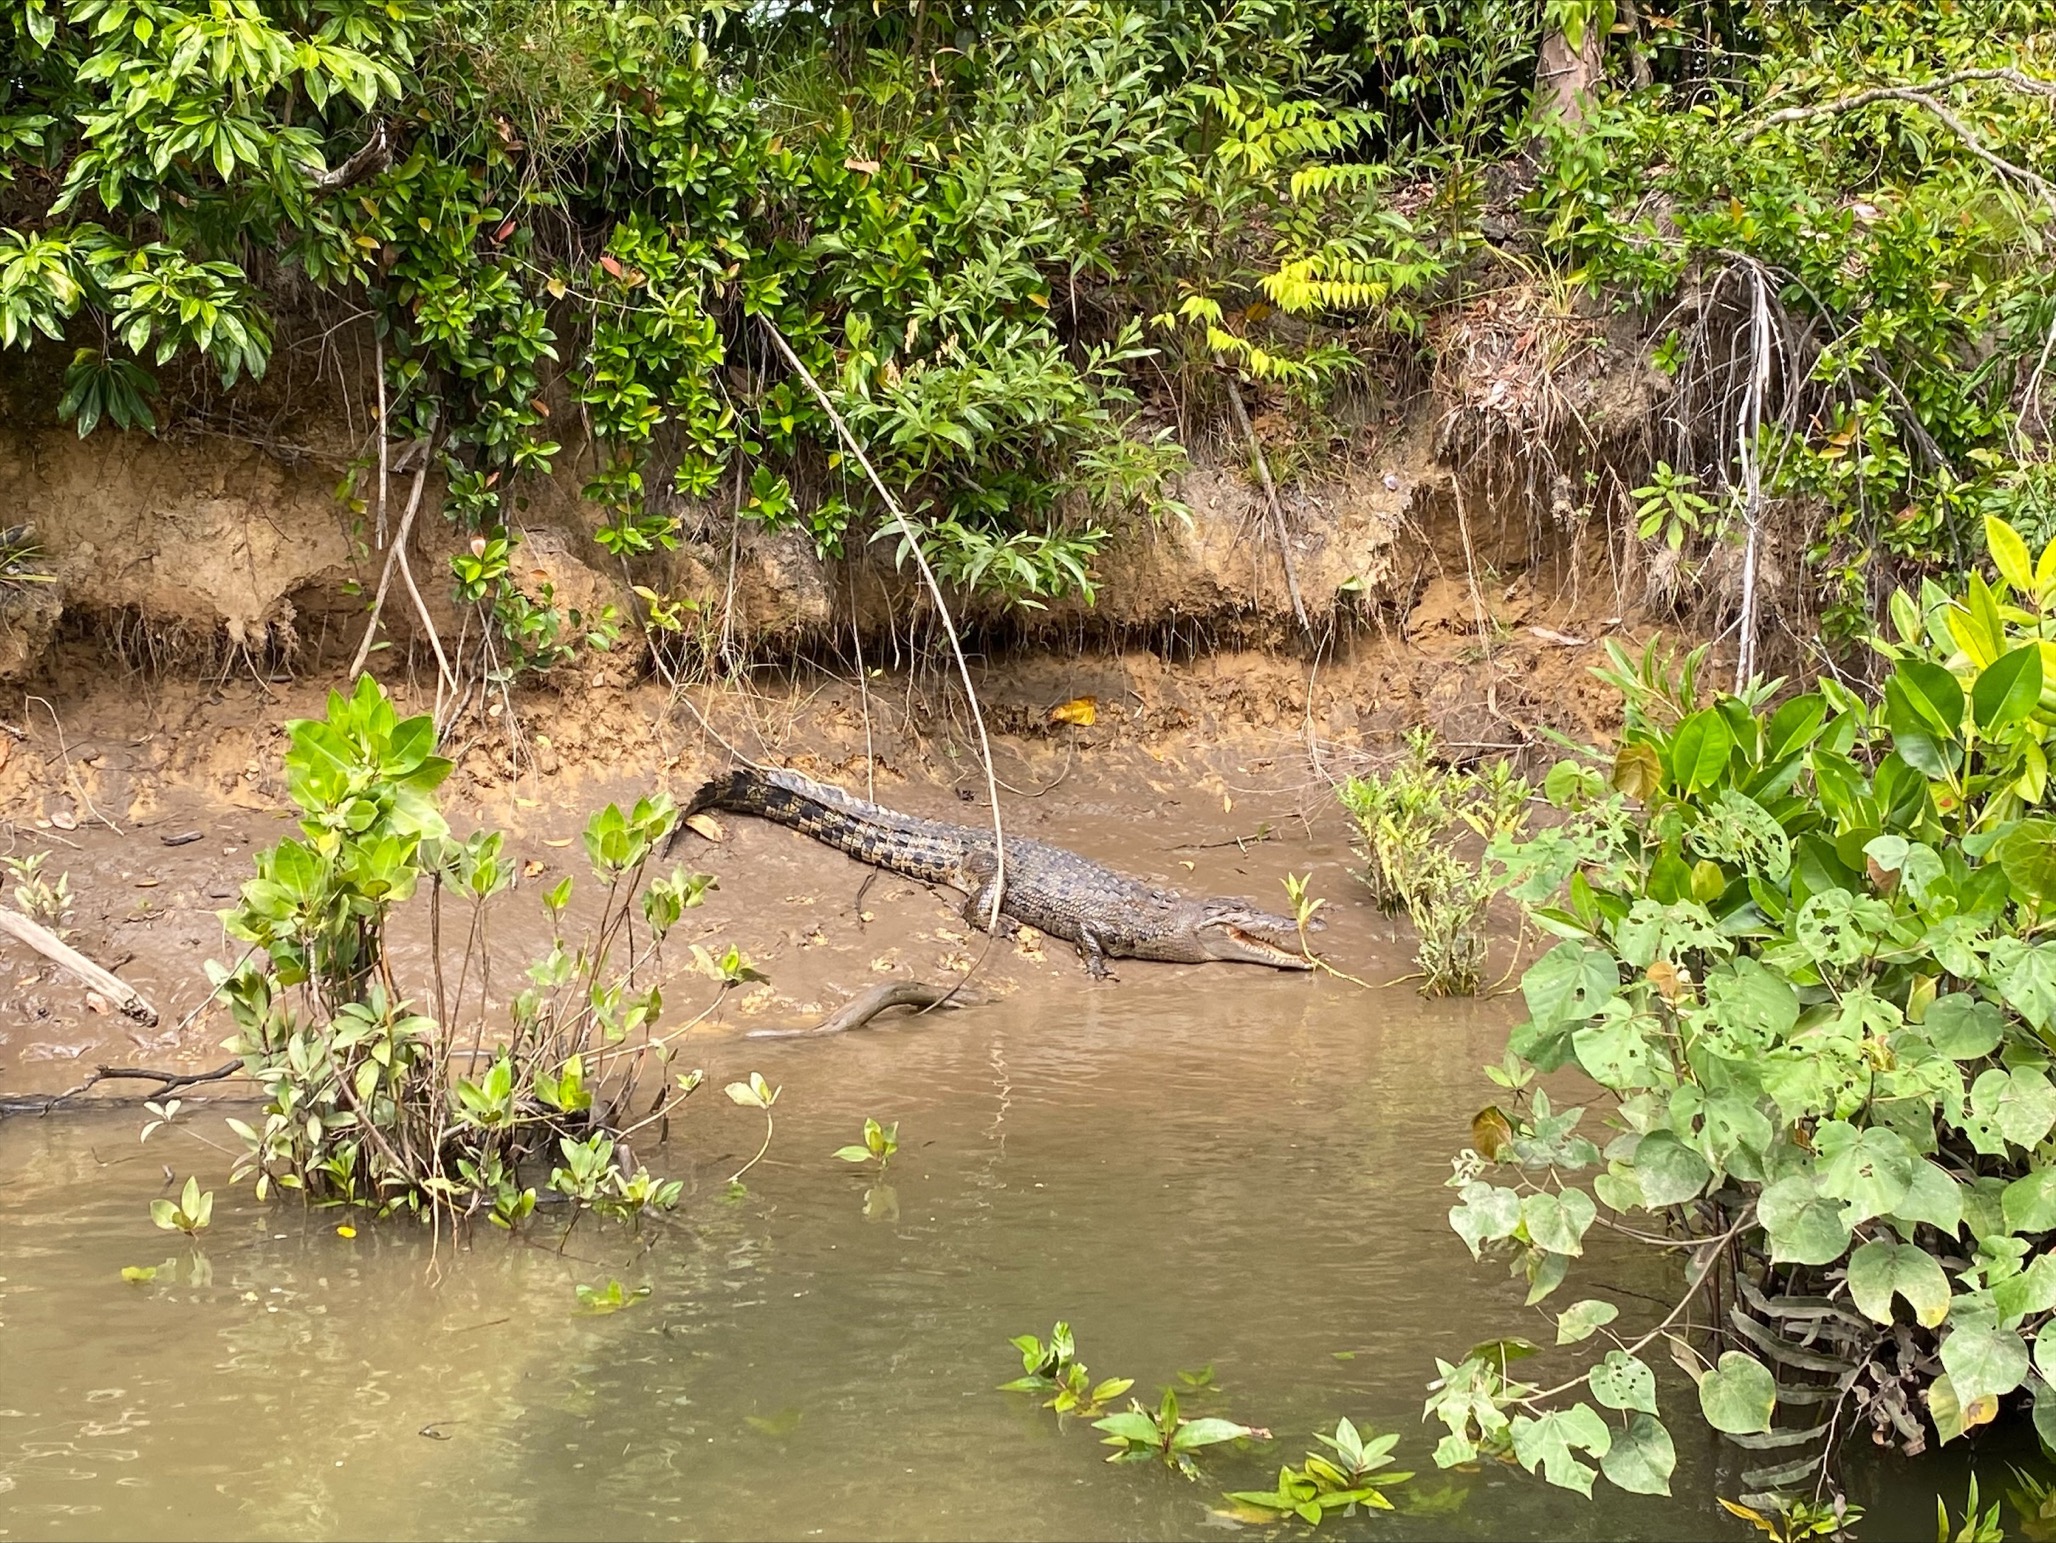 Crocodile on a river bank